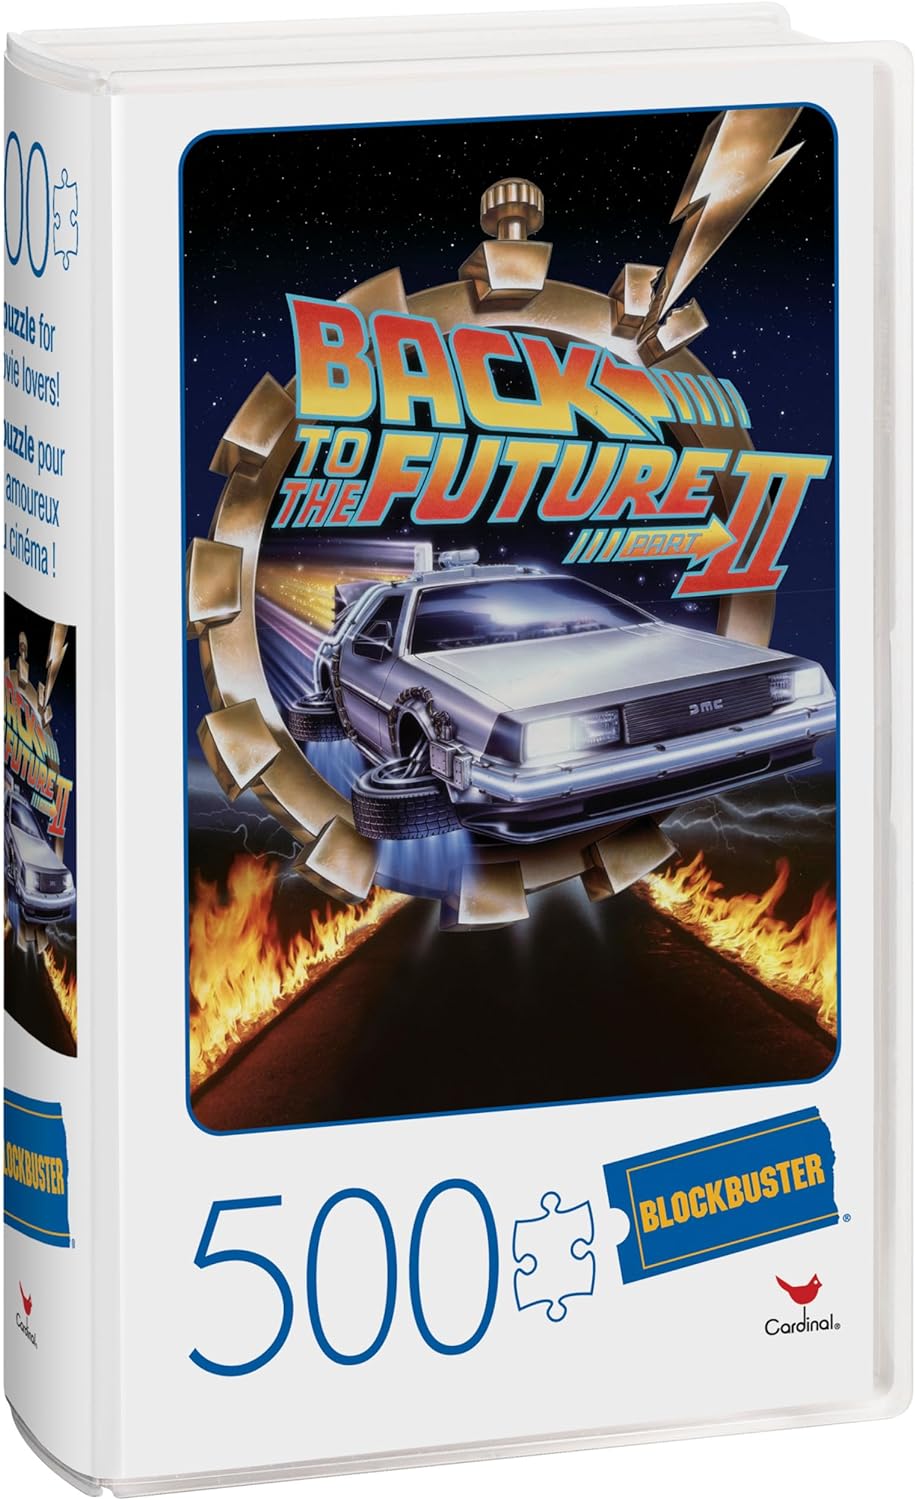 BACK TO THE FUTURE II BLOCKBUSTER 500 PCS PUZZLE